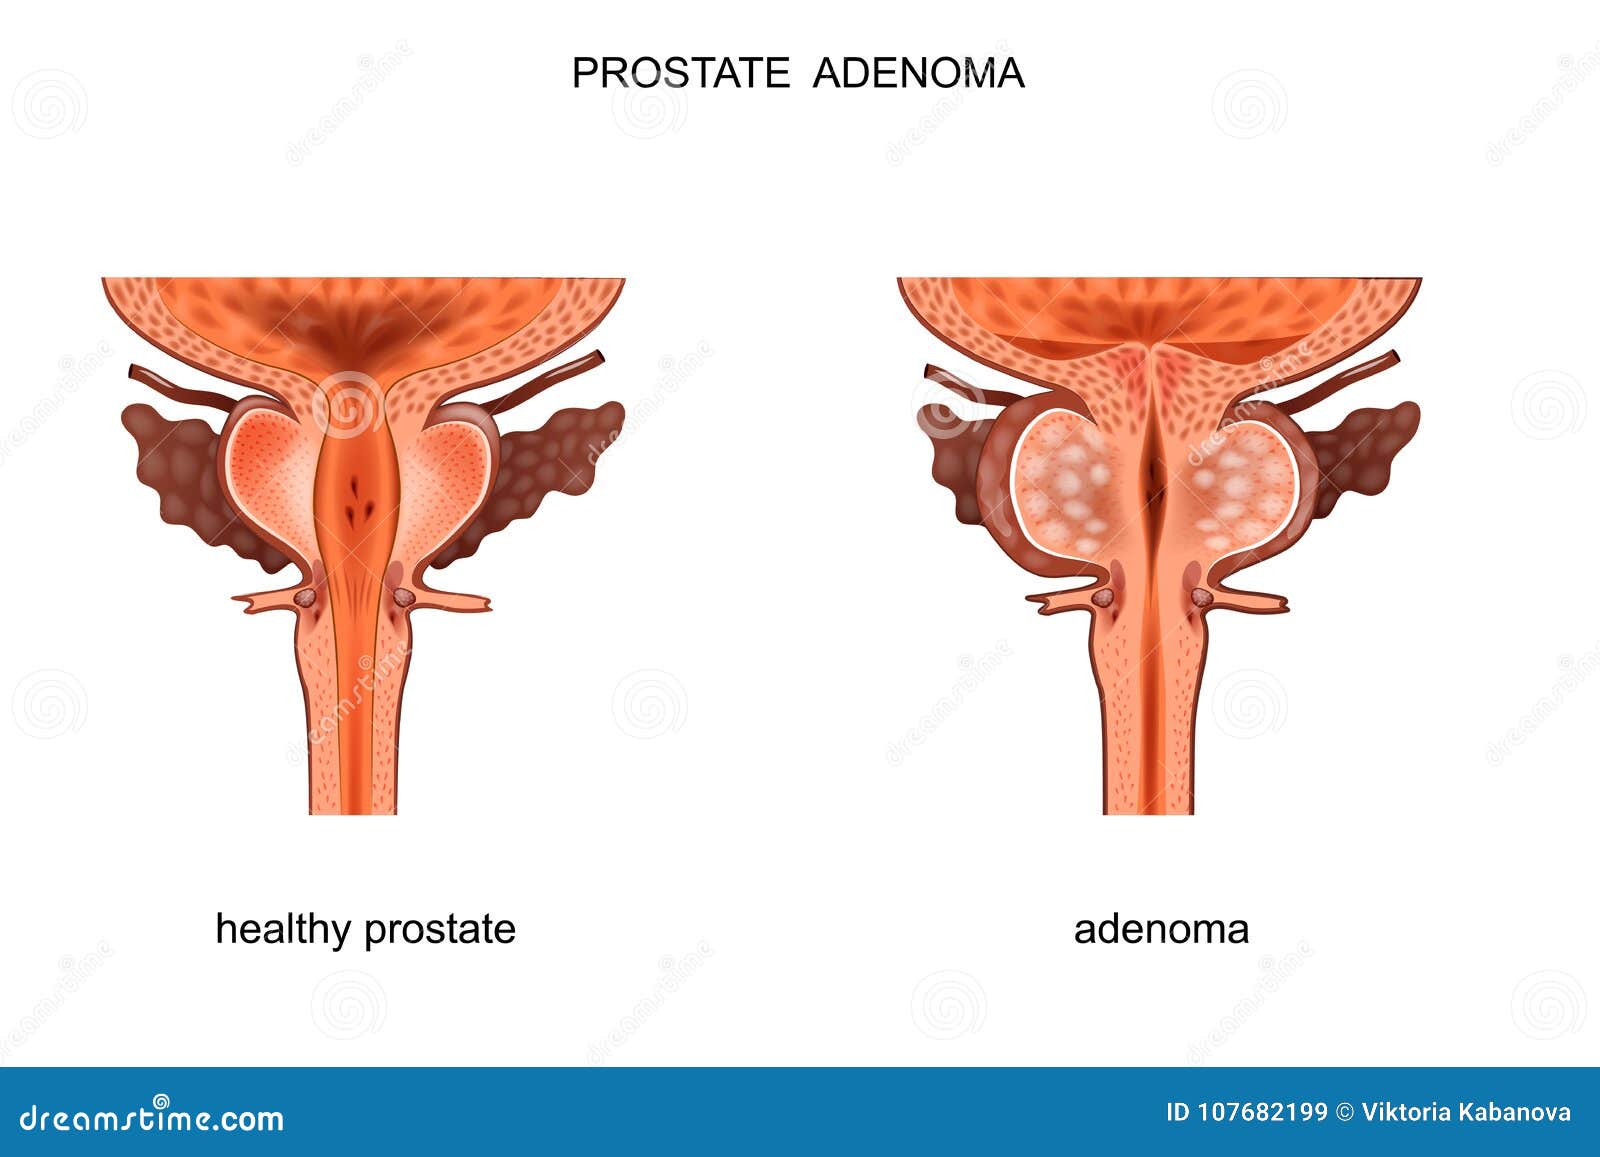 medicament prostatita adenom prostatita slăbiciune temperatură